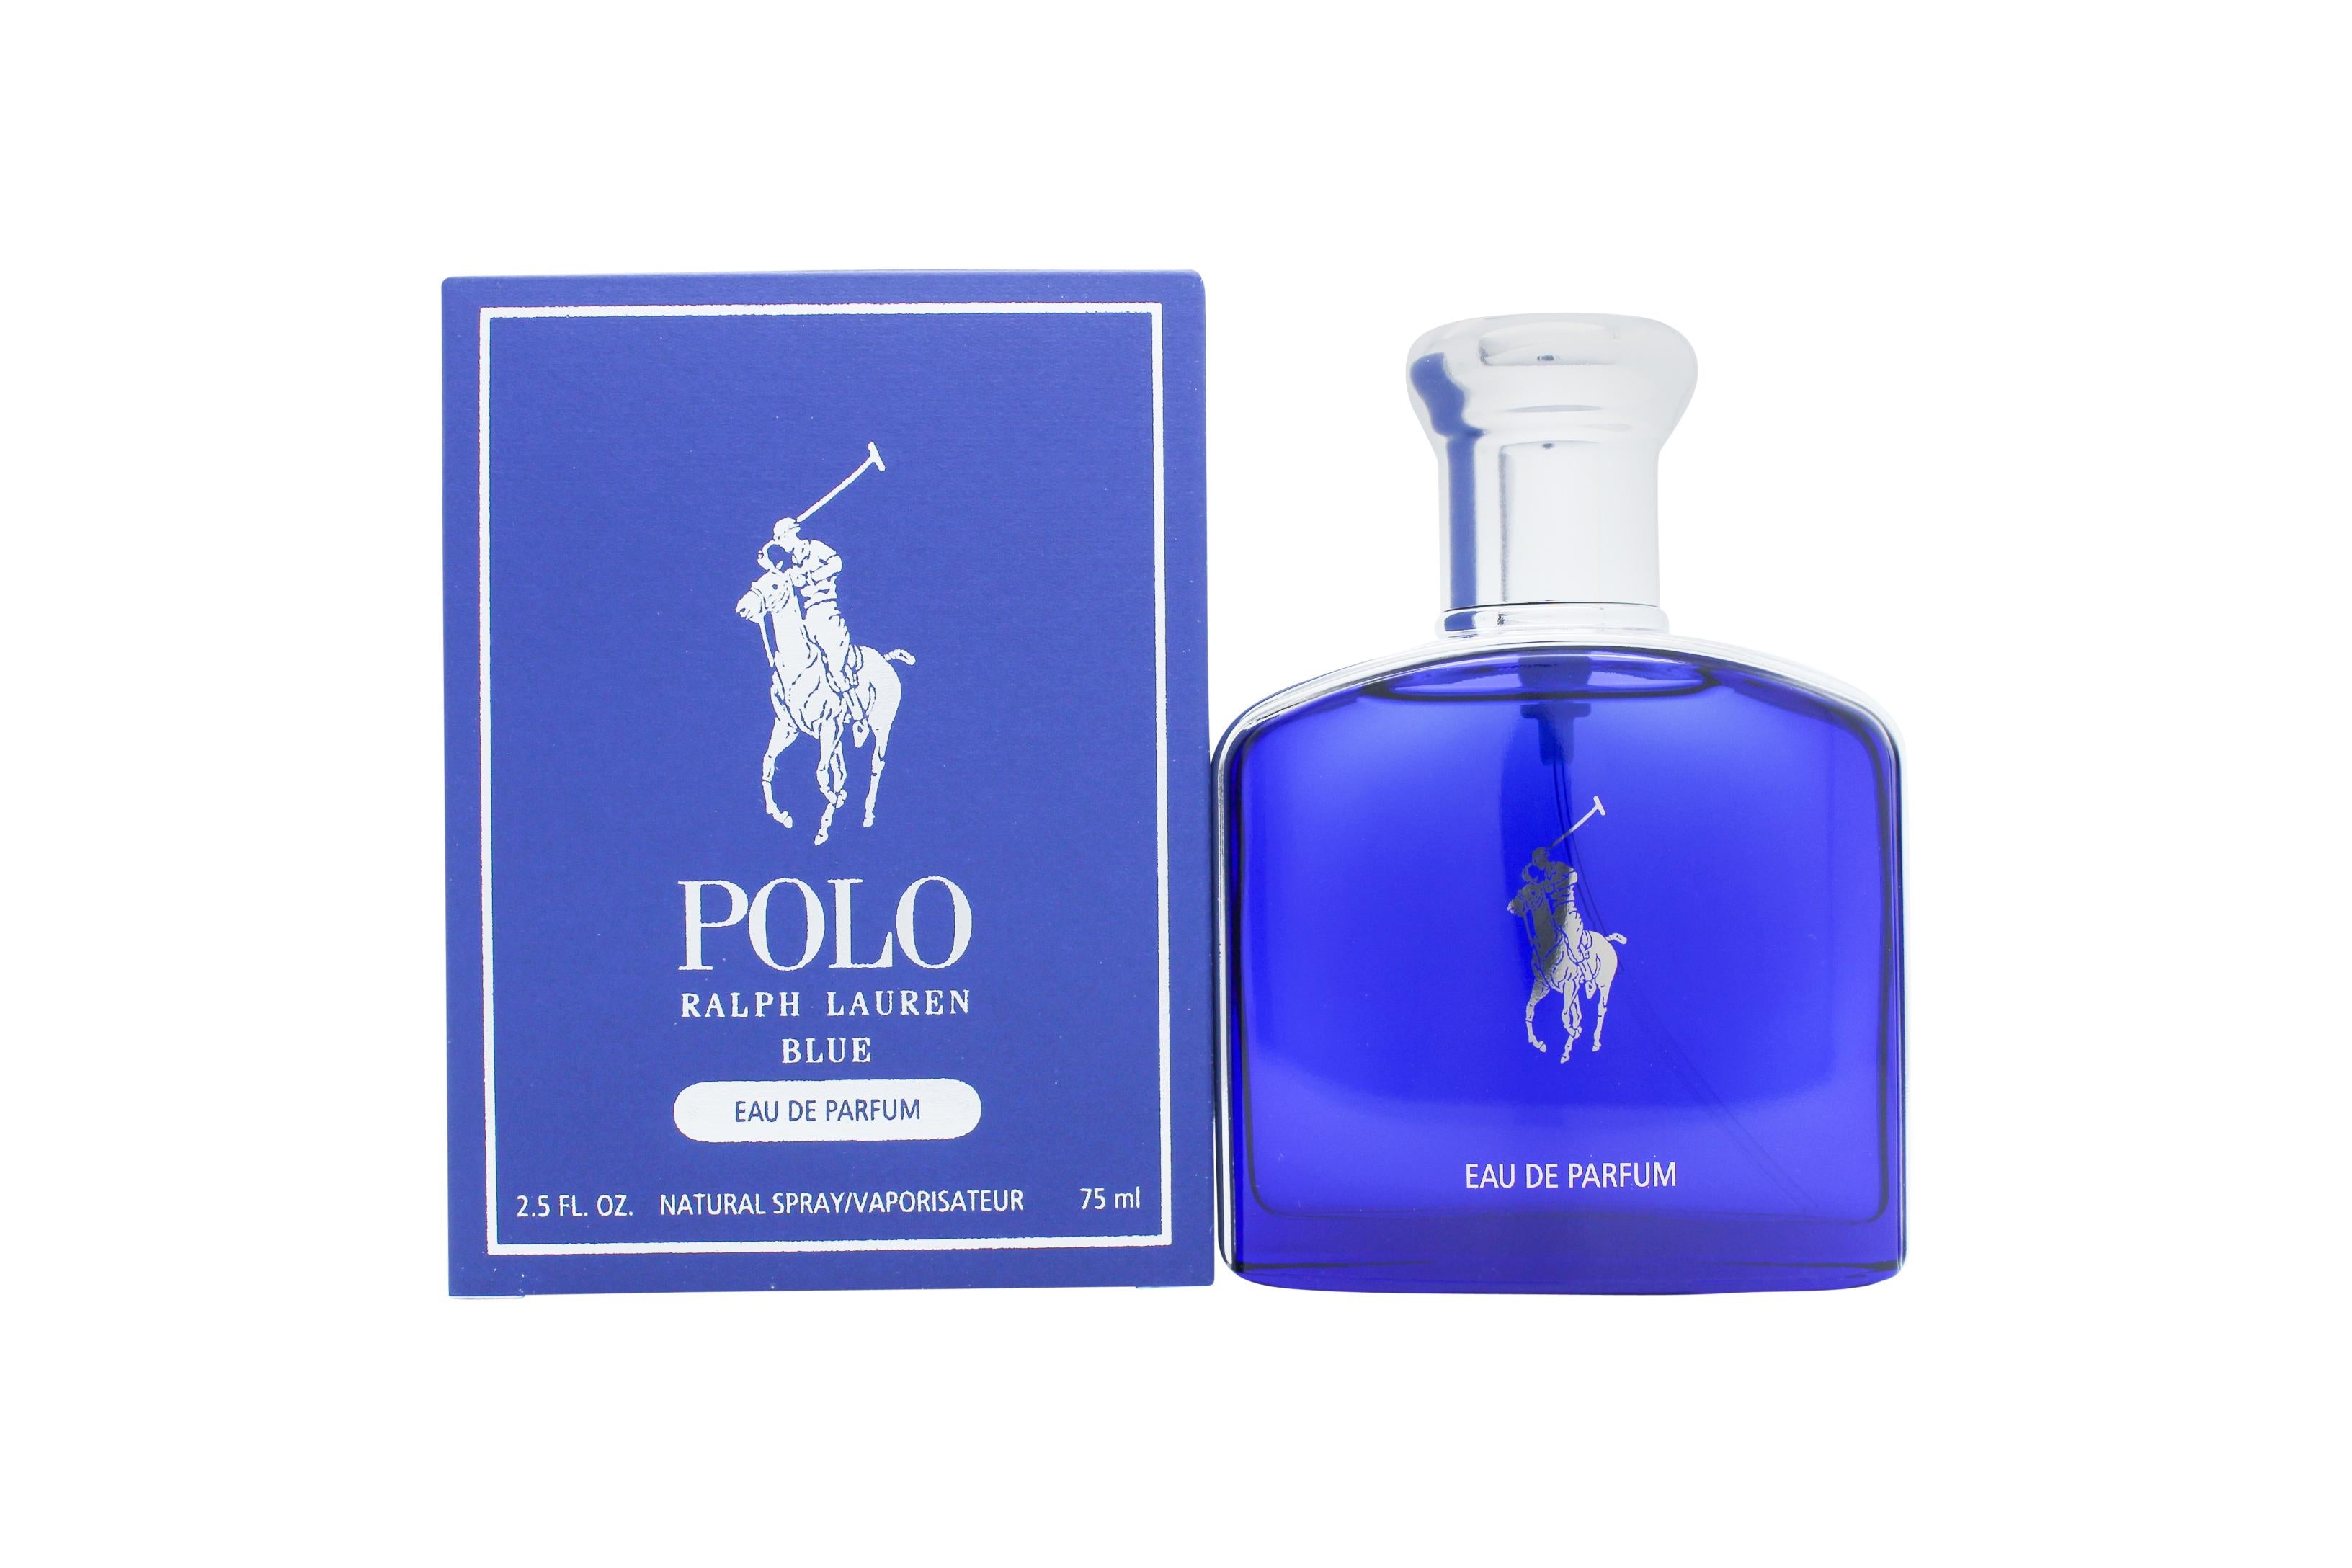 View Ralph Lauren Polo Blue Eau de Parfum 75ml Spray information